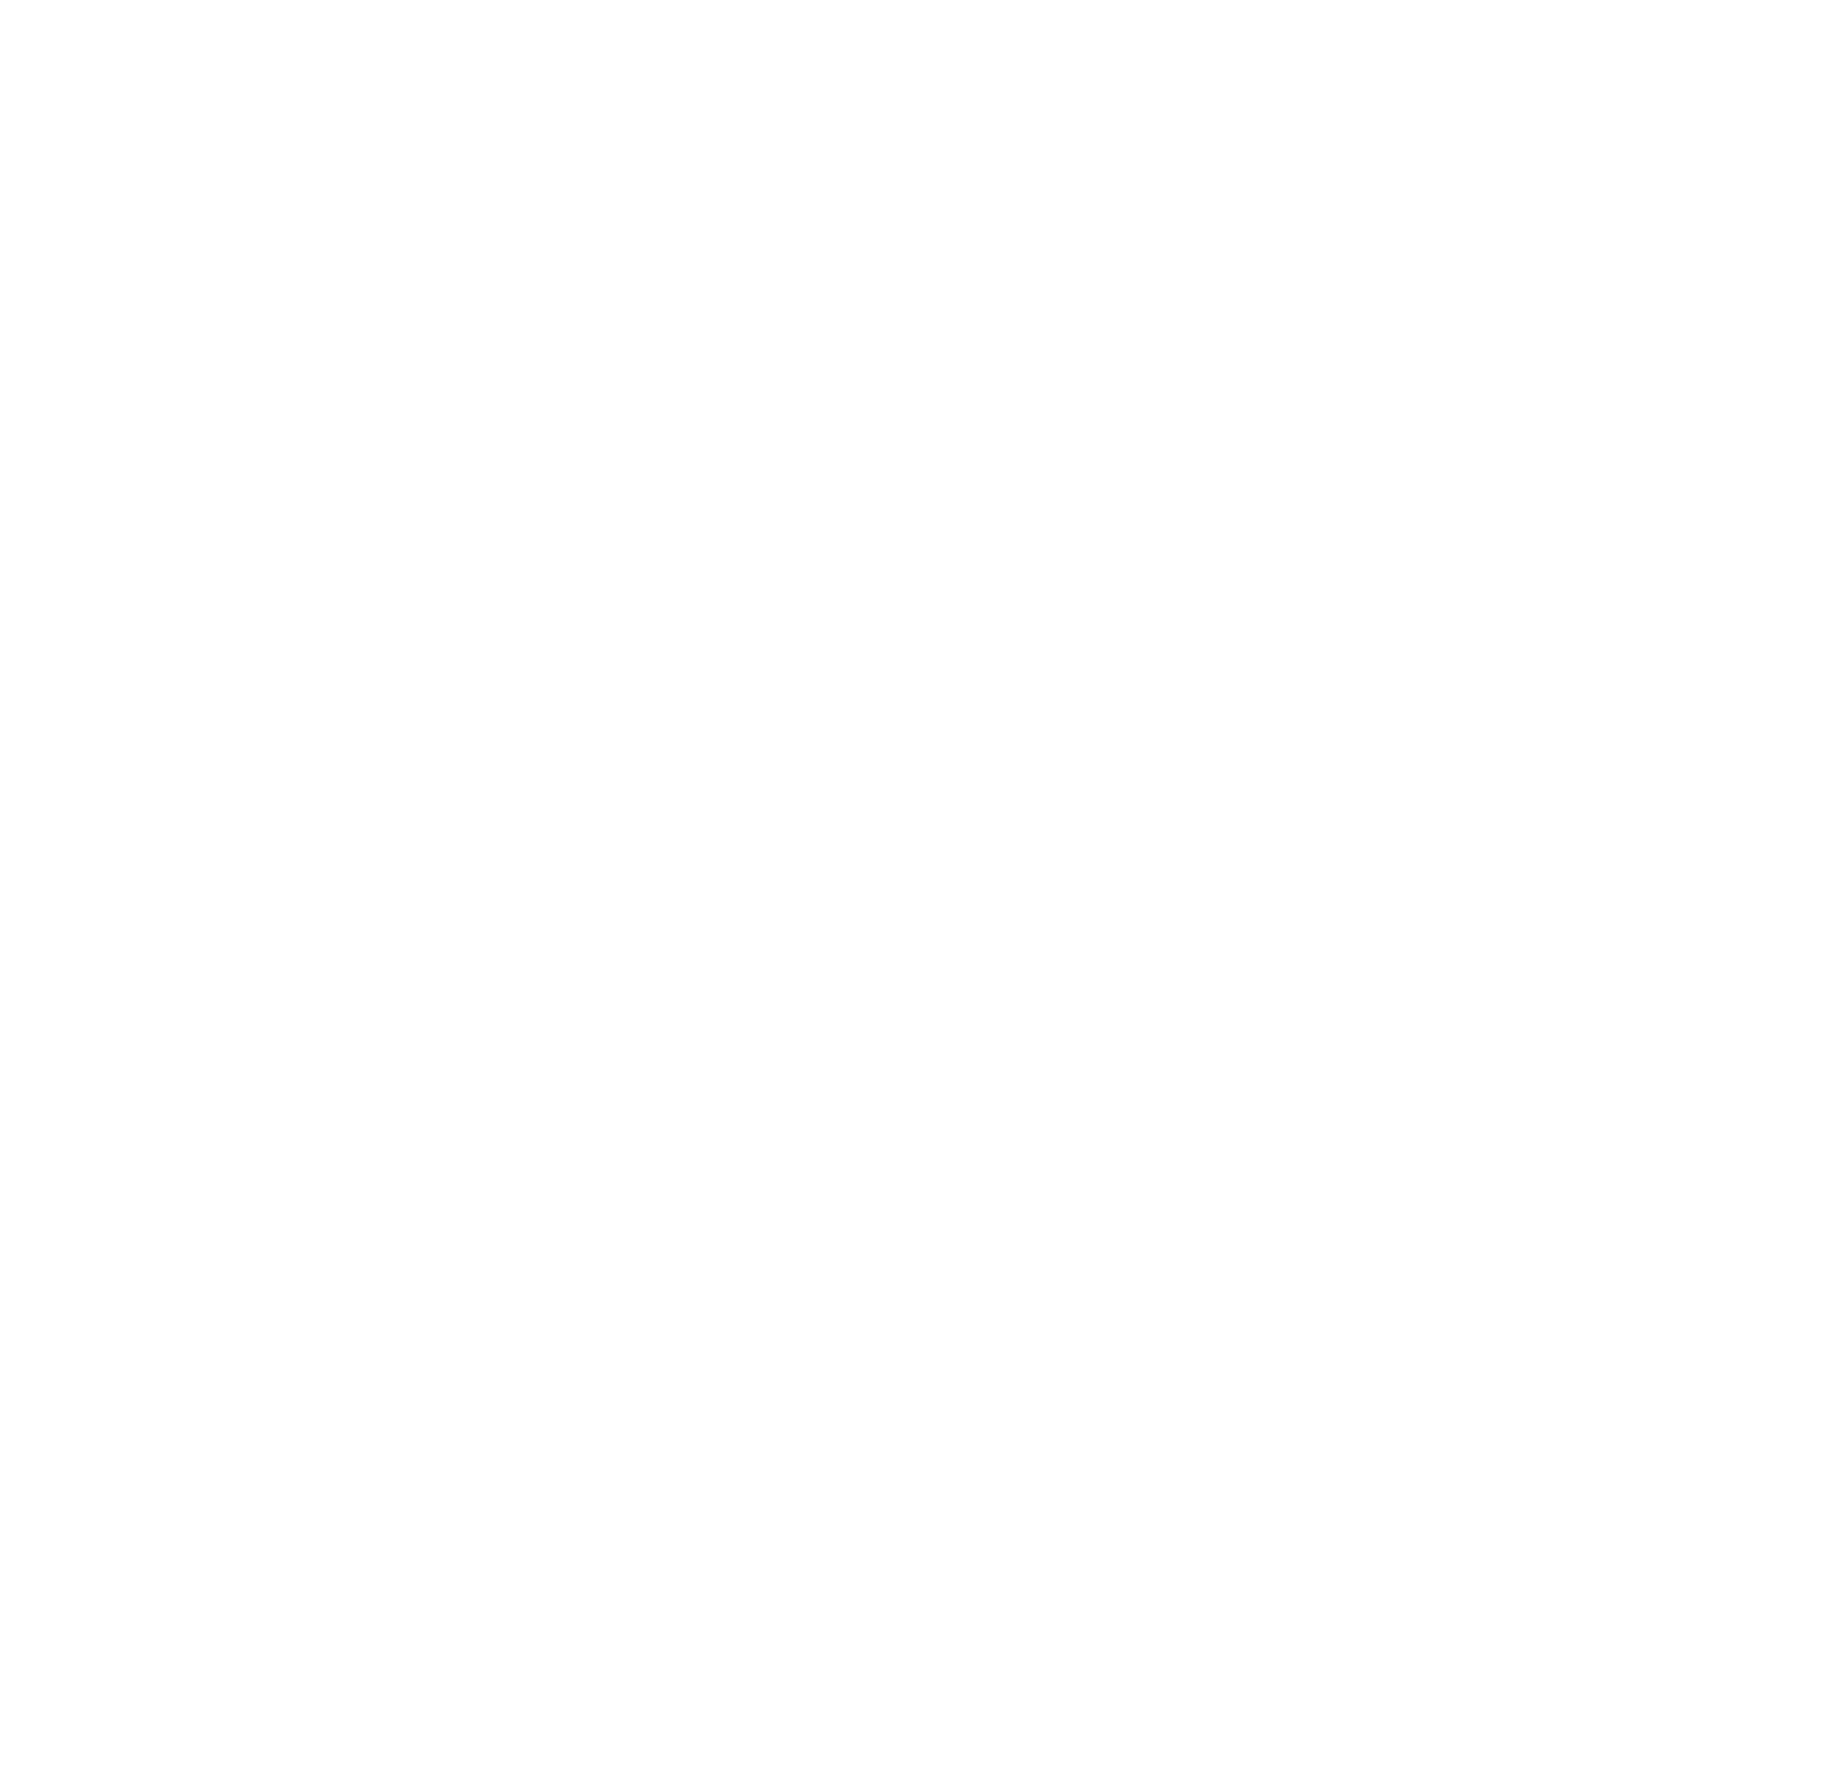 Miller's Grove